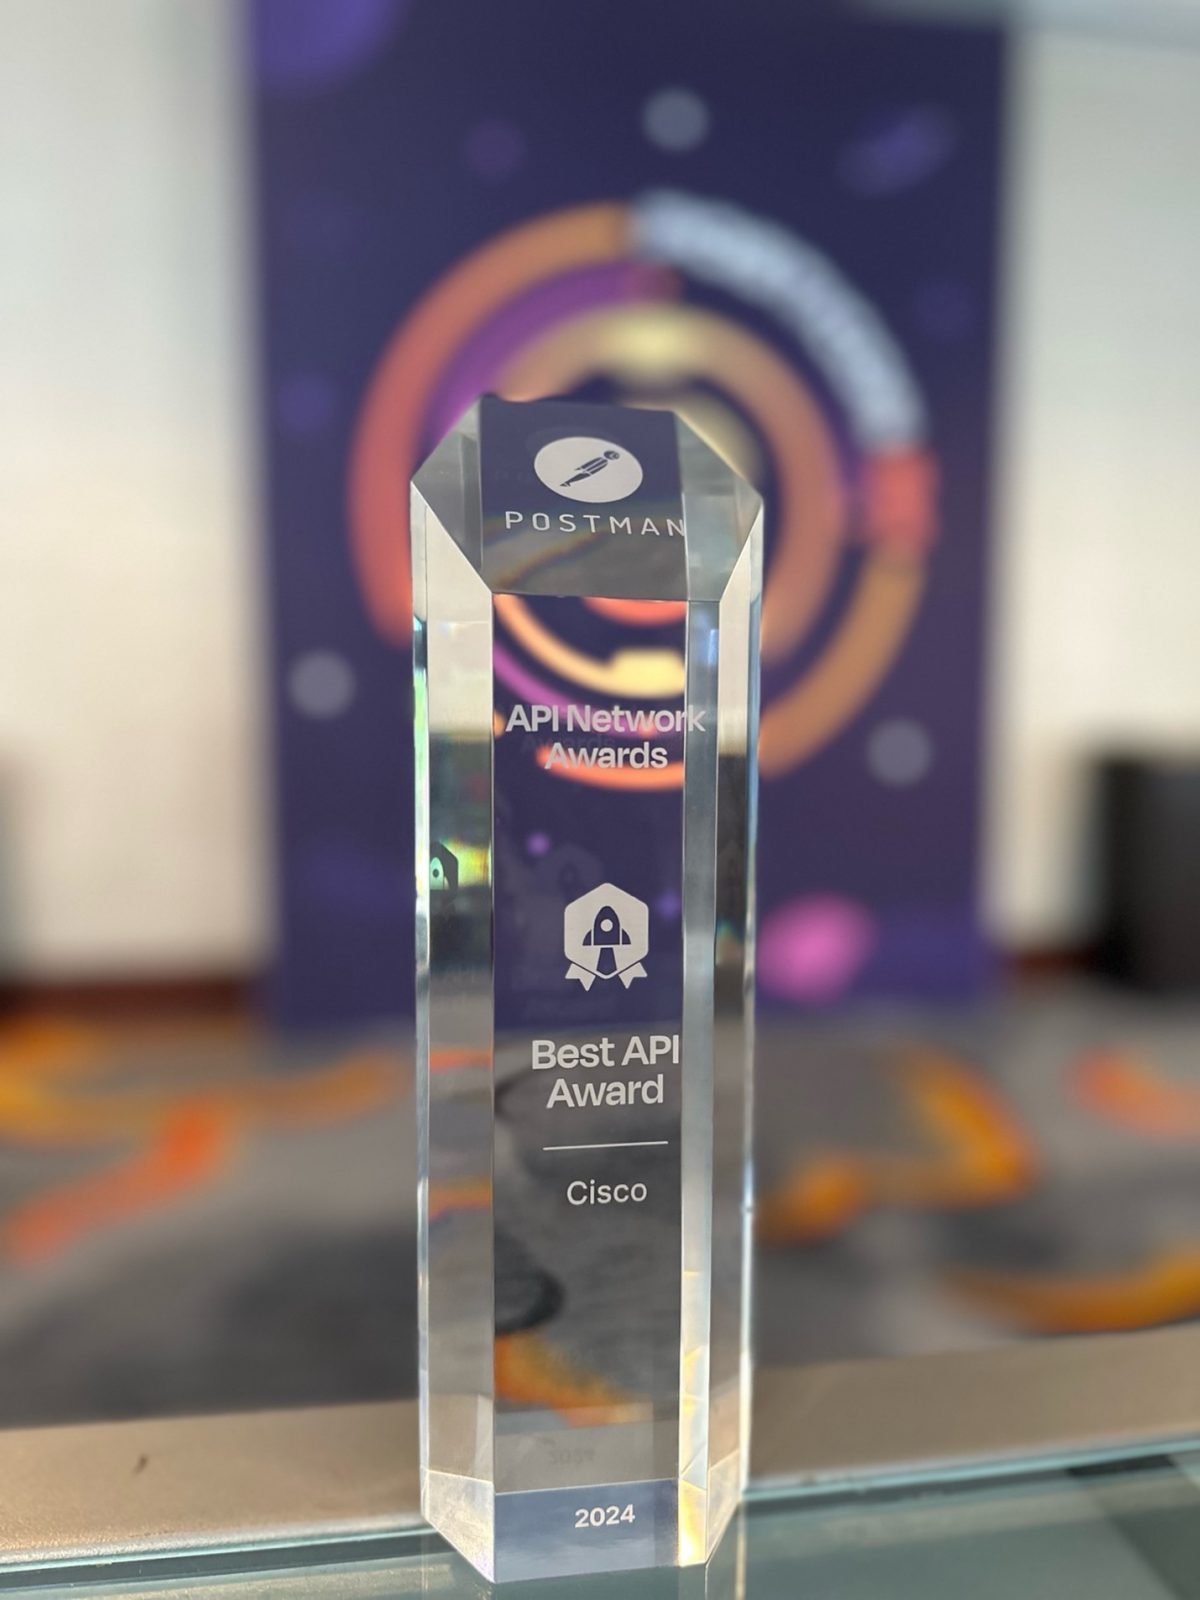 Cisco Meraki Secures the Postman “Greatest API Award”